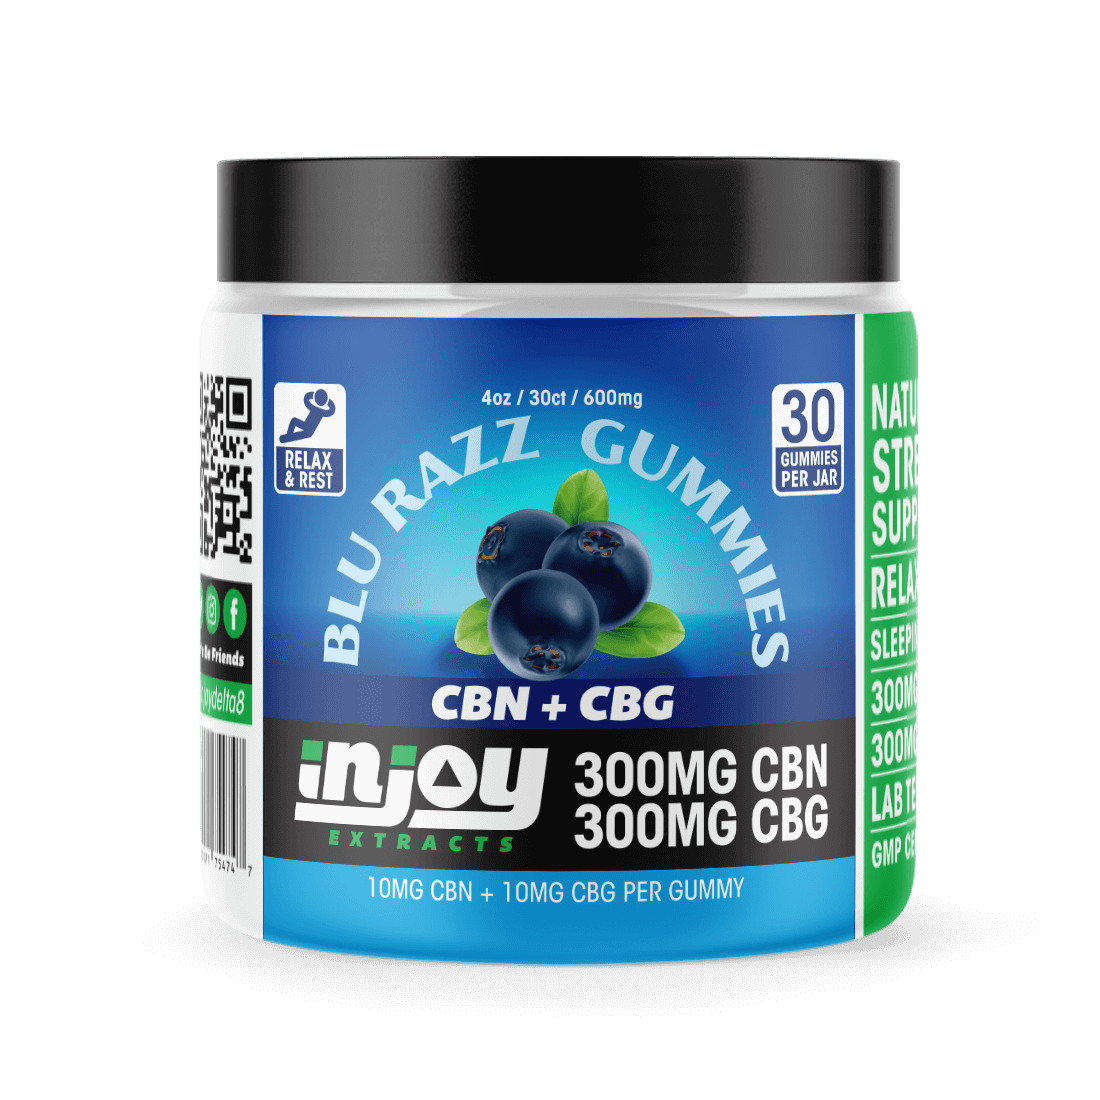 CBN: CBG Gummies - 20mg - Wholesale Injoy Extracts